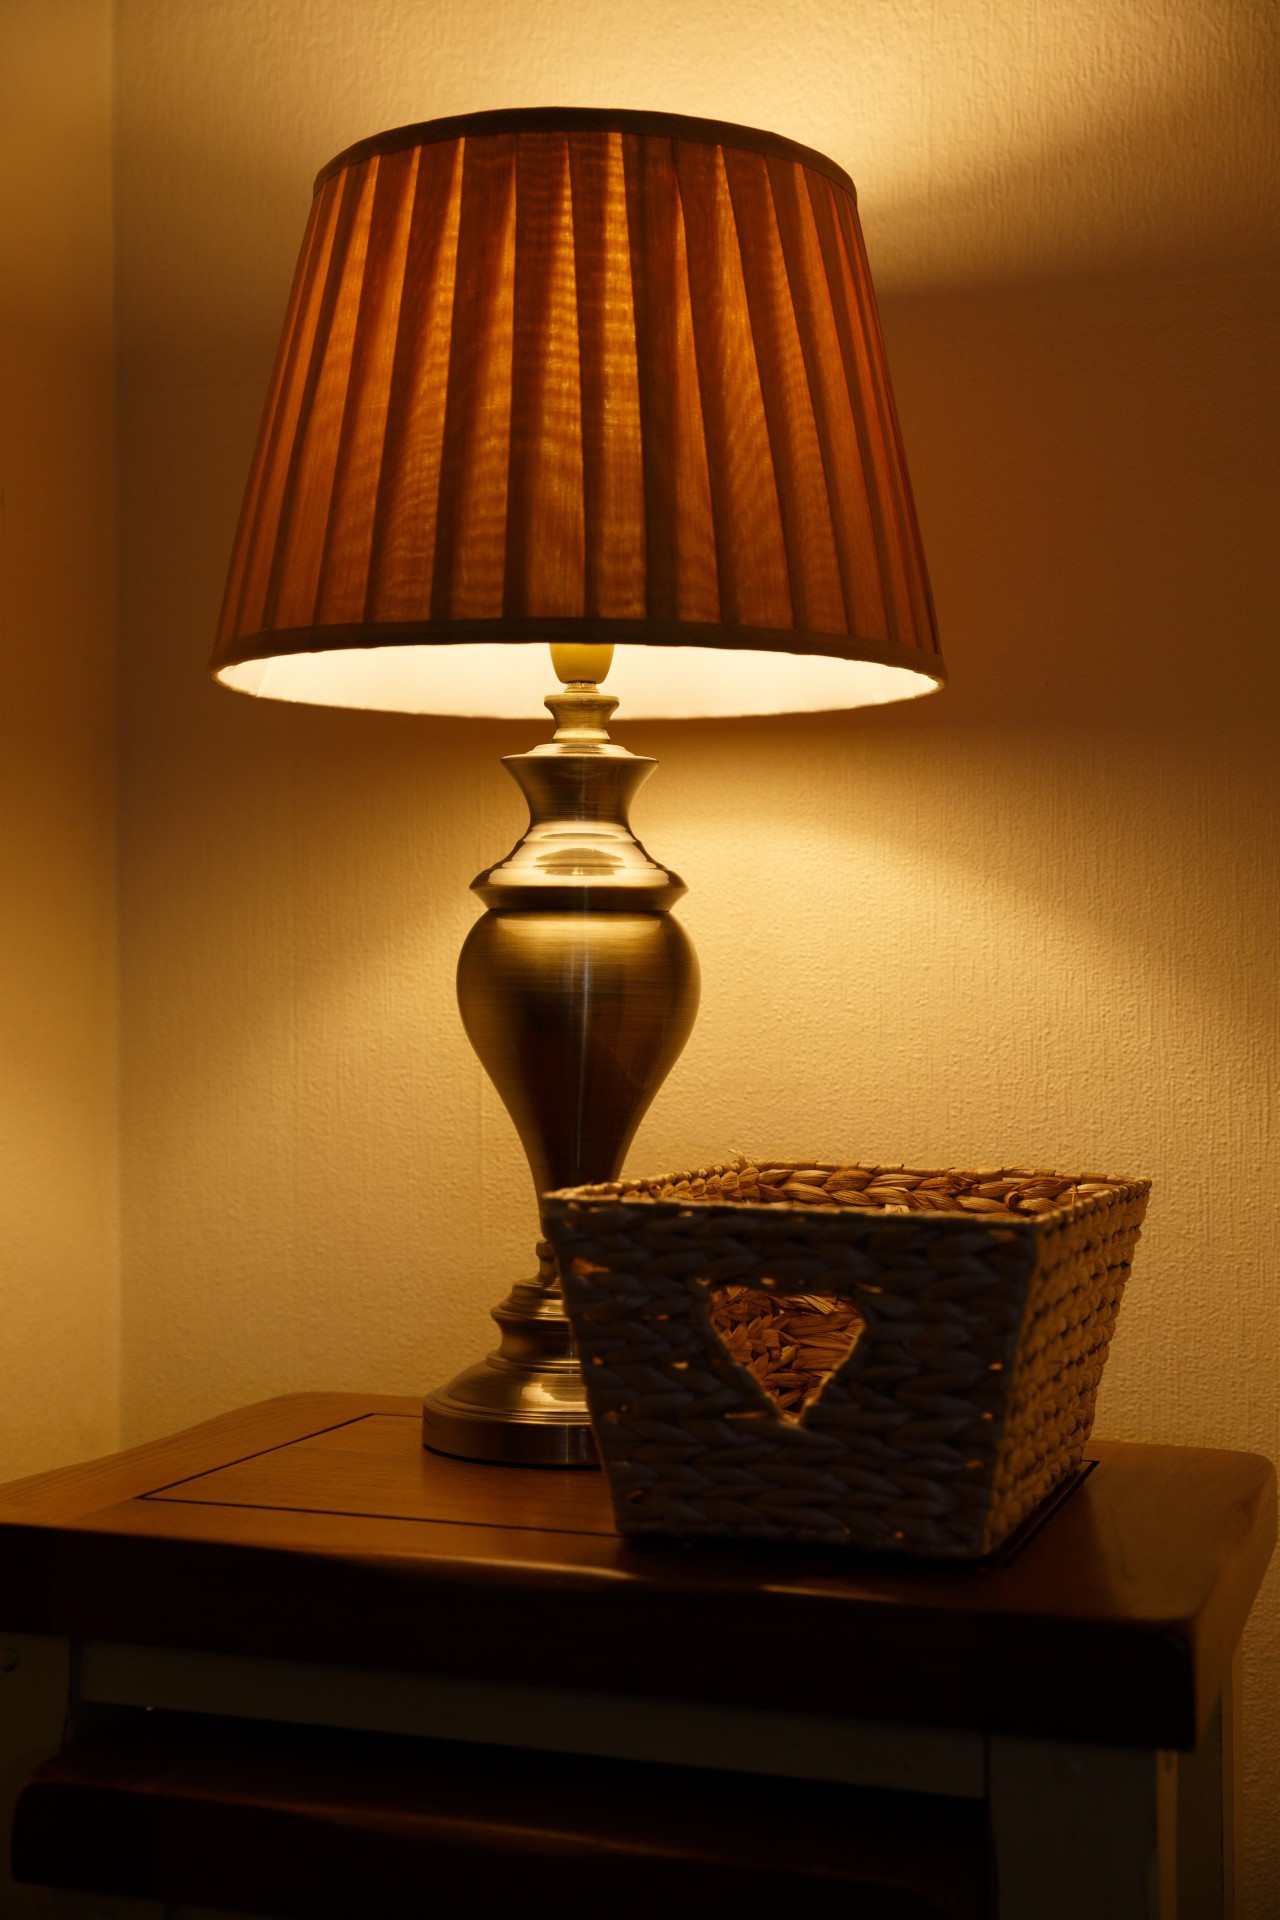 Living Room Table Lamp
 Home Design — DiyFirePitBurner DiyFirePitGrillGrate